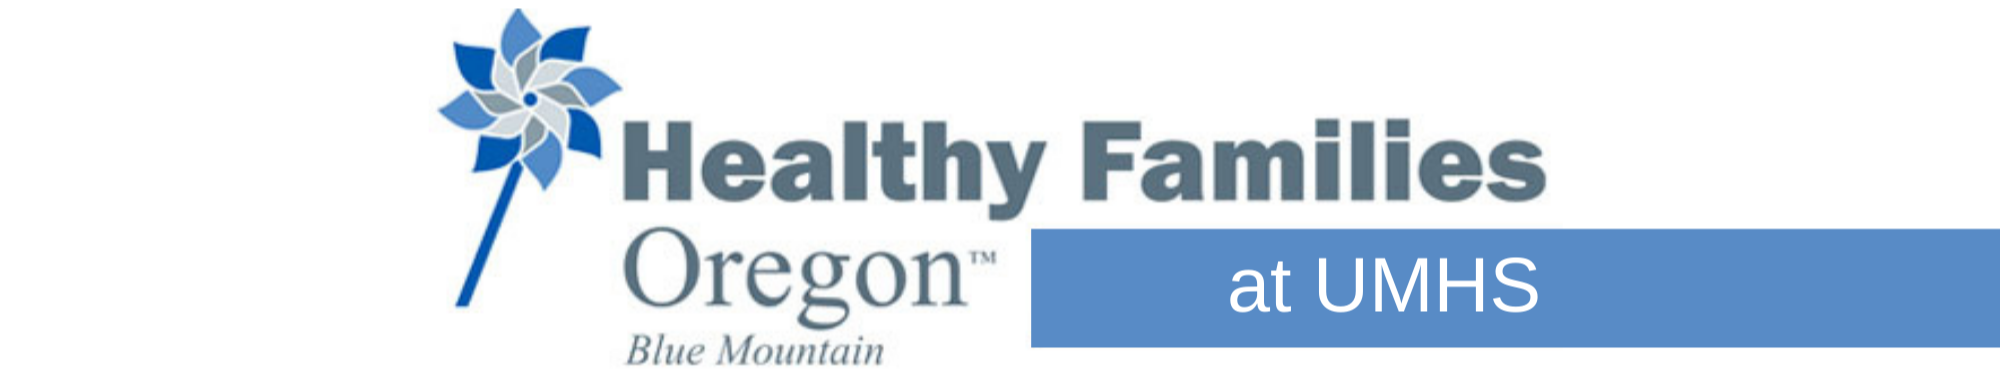 Healthy Families Oregon